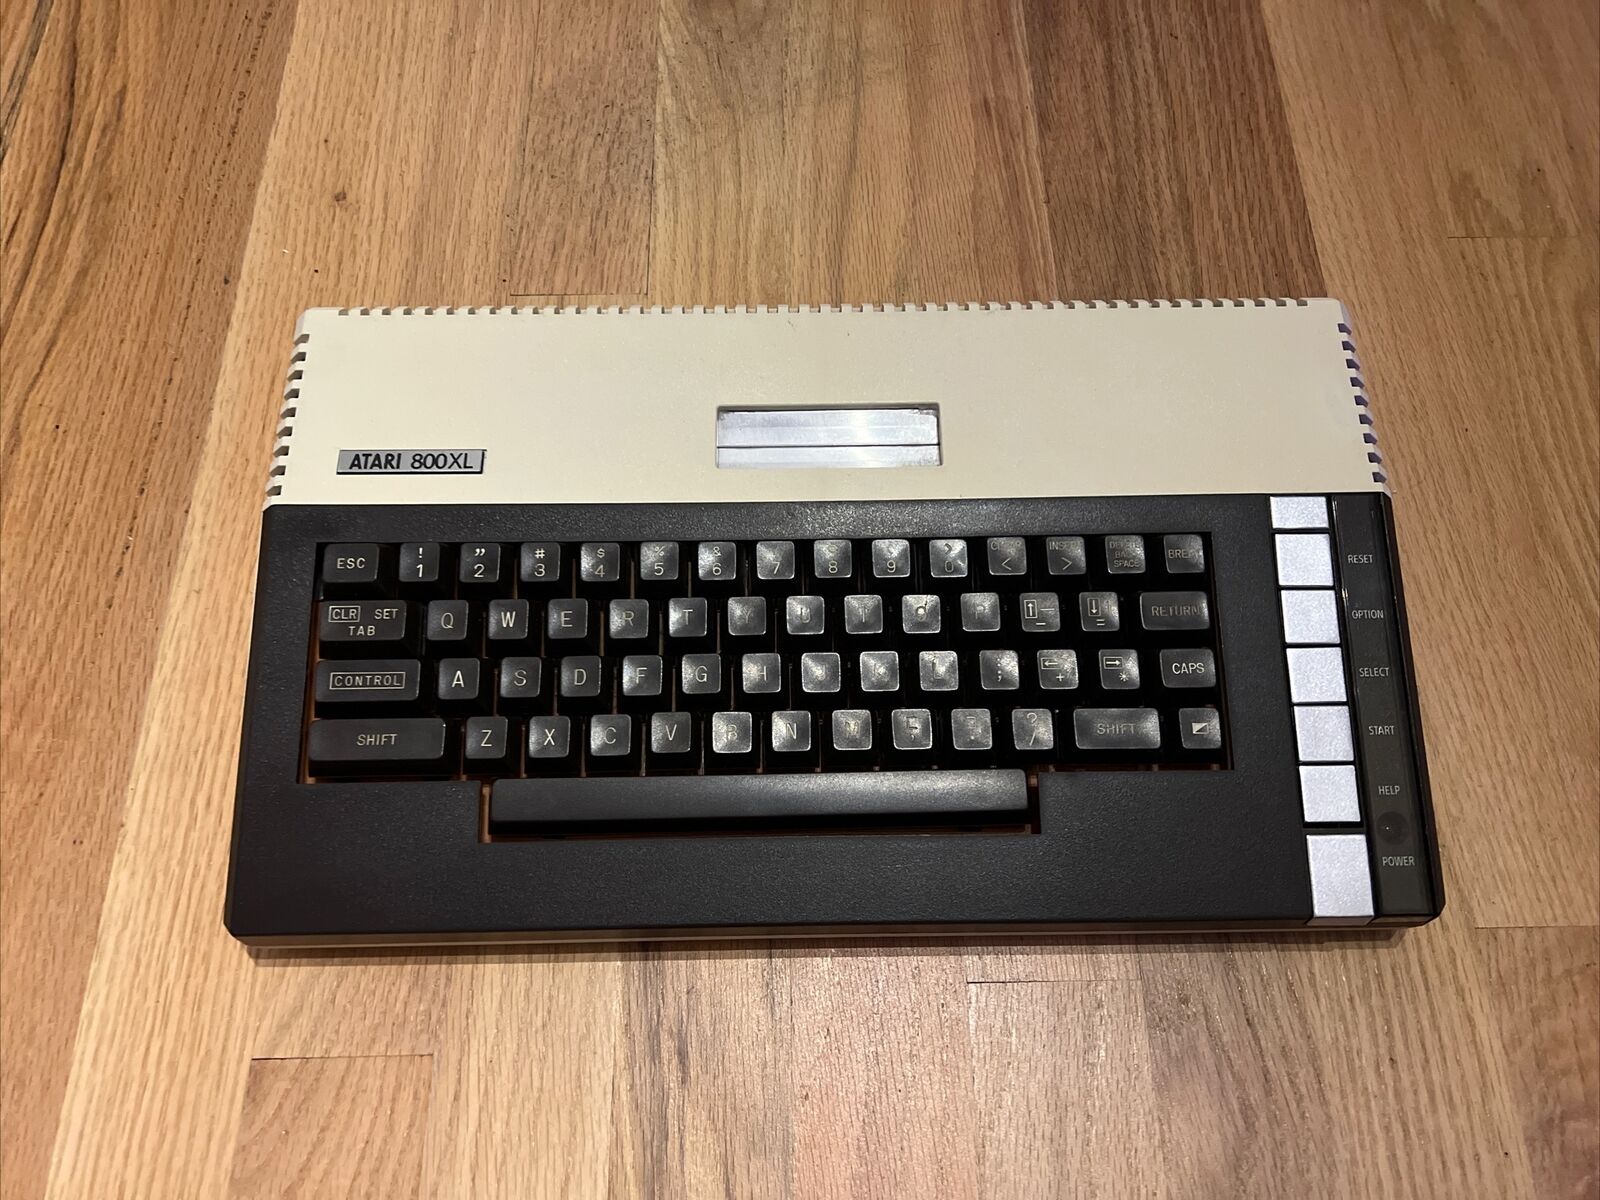 Atari 800xl nice condition.  AtariMax cartridge loaded with Games